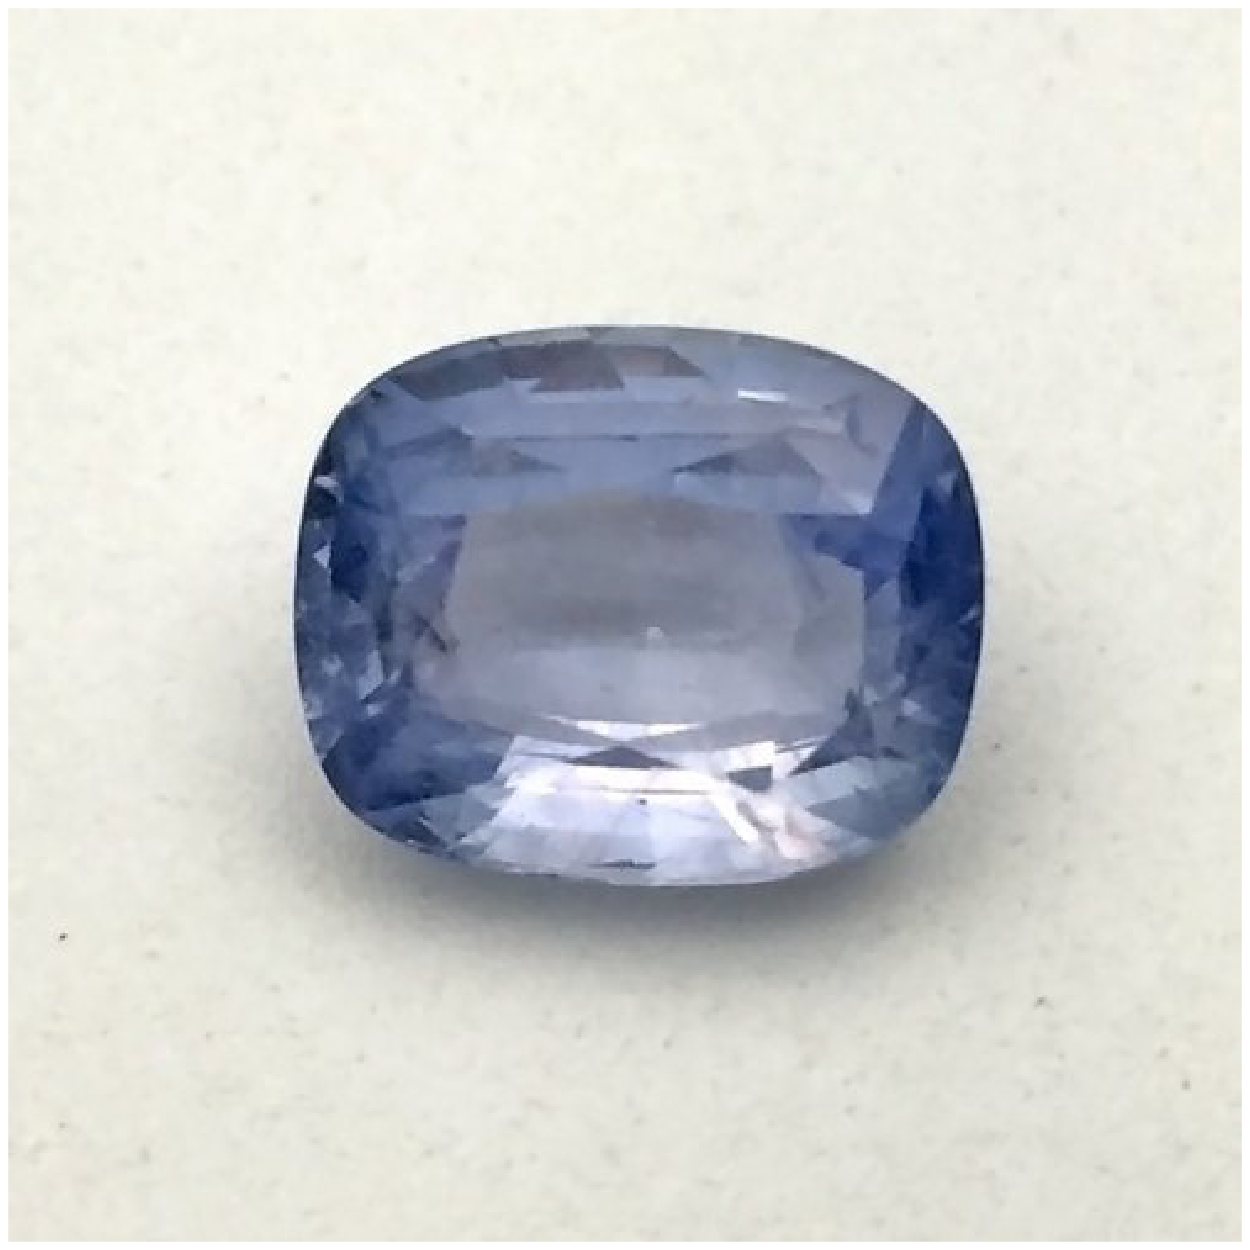 Blue sapphire stone - blueple